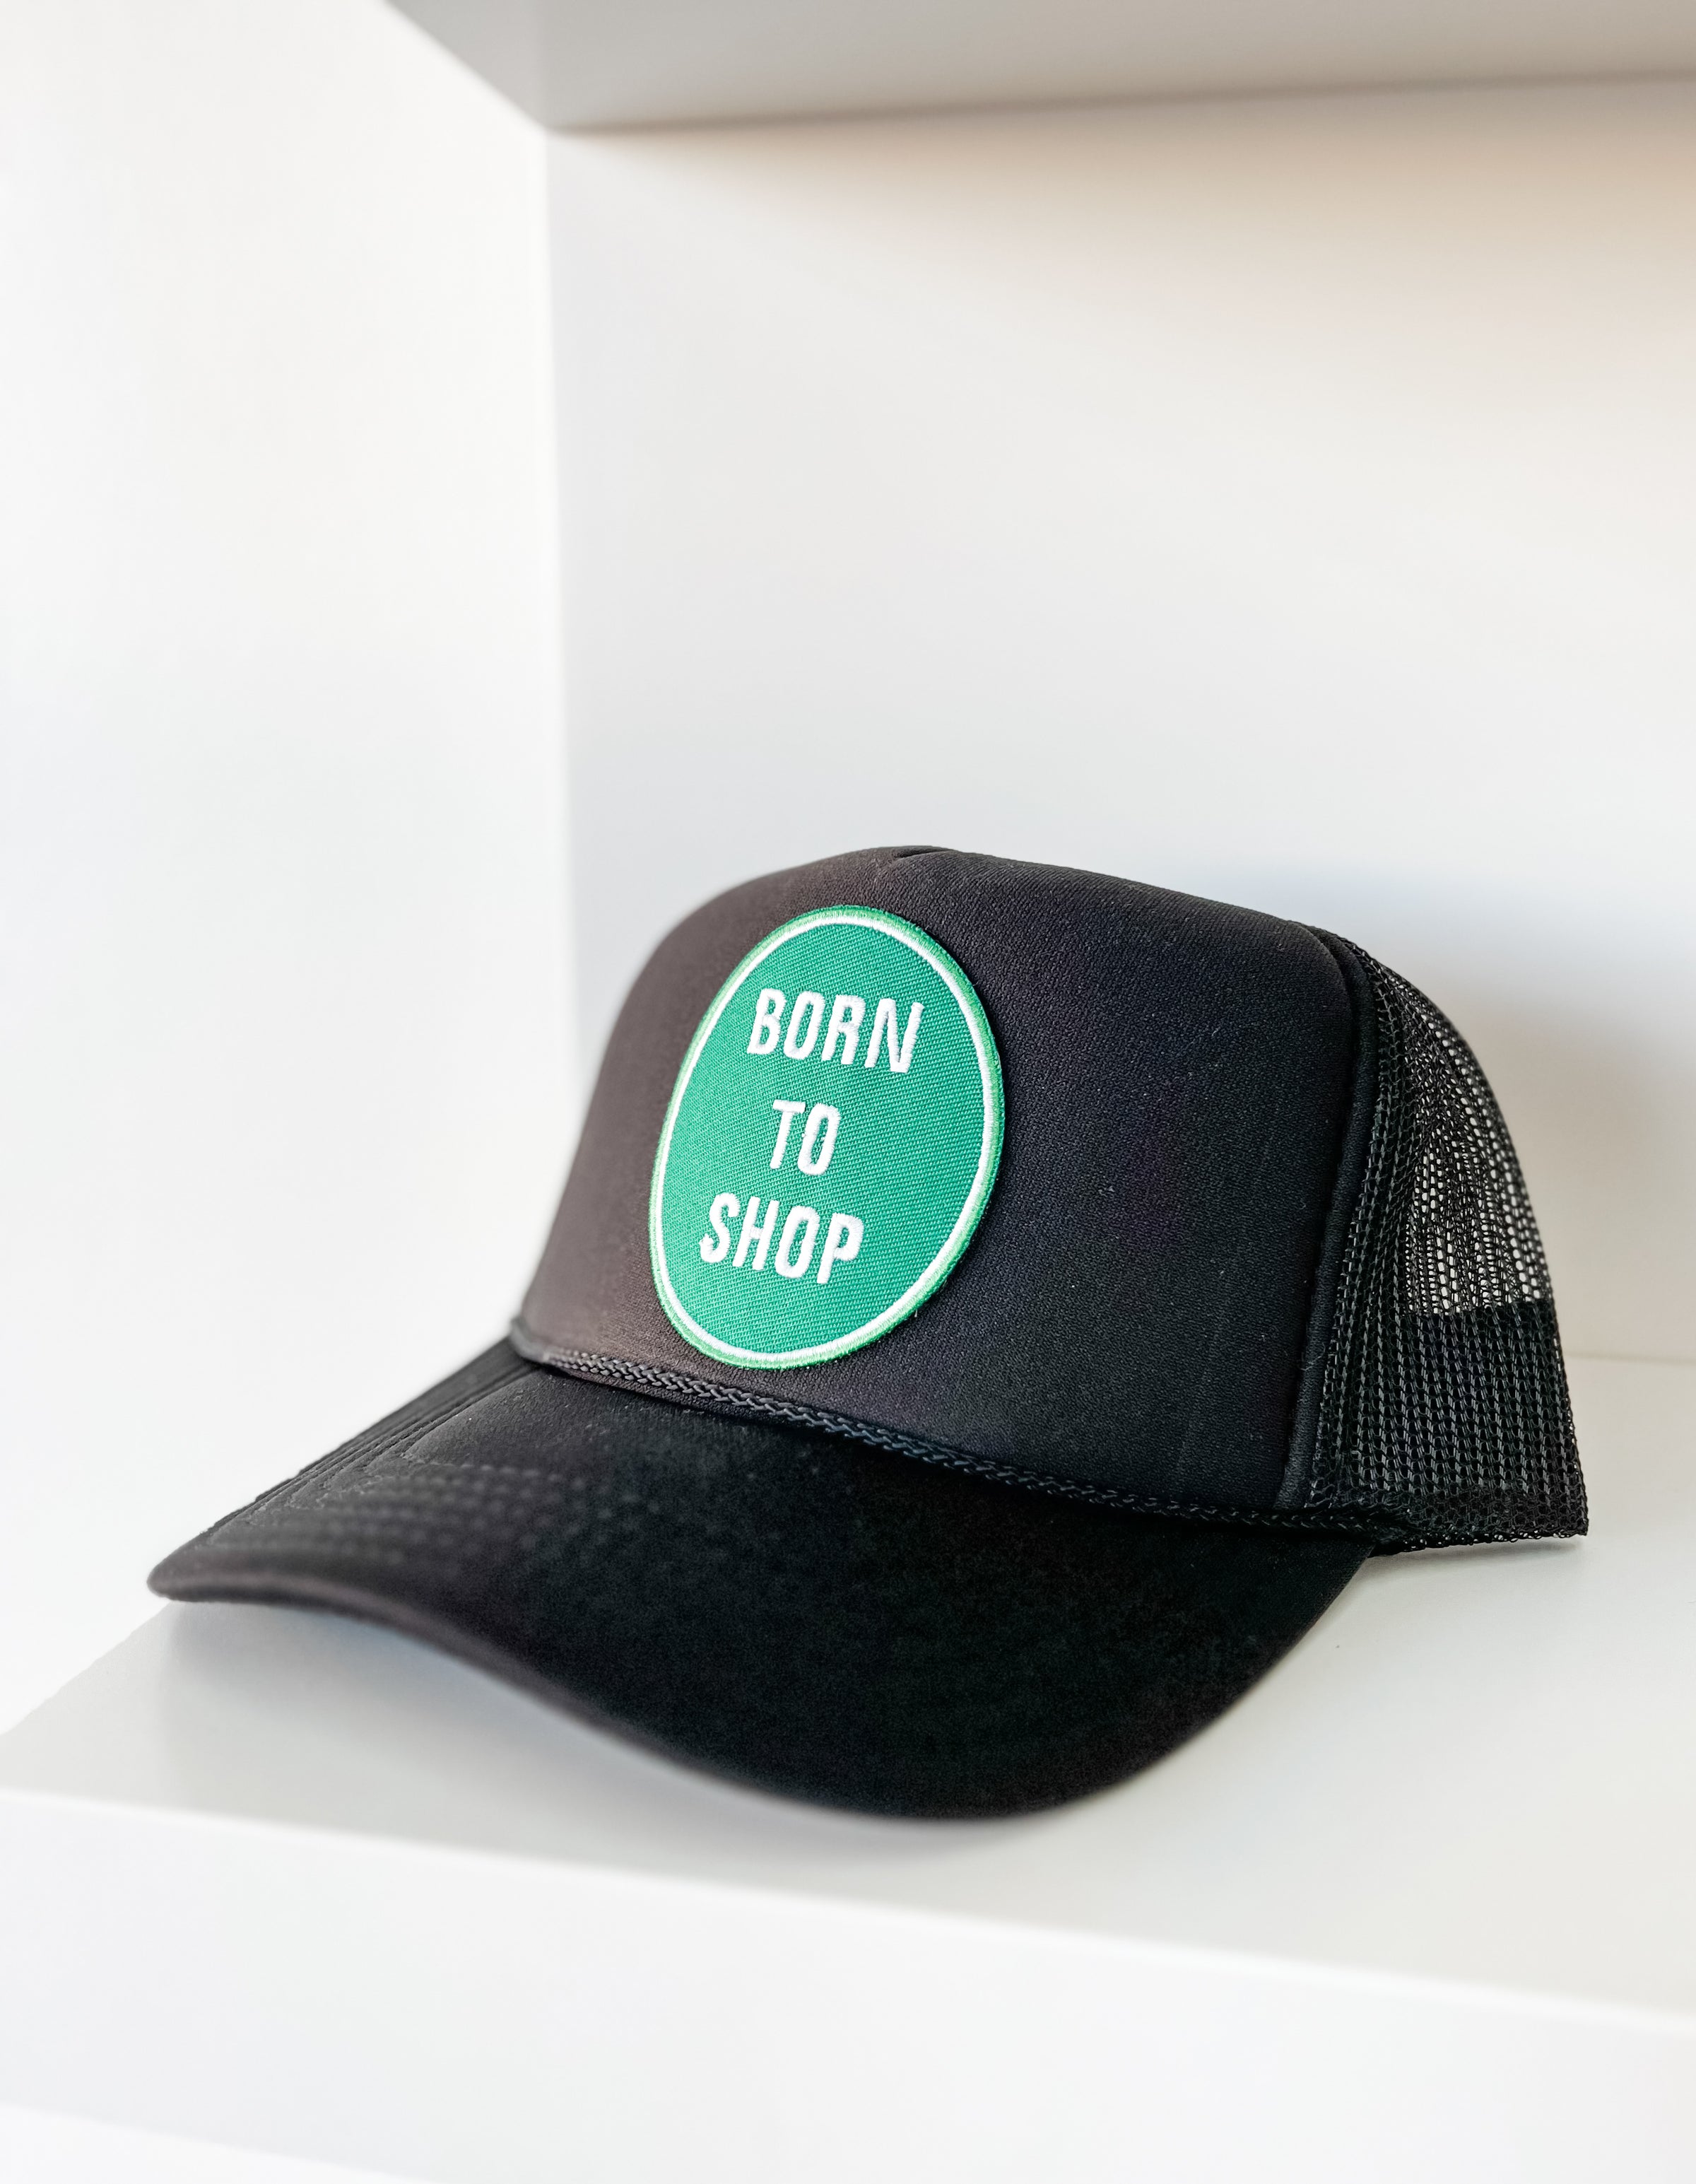 Born to Shop Trucker Hat